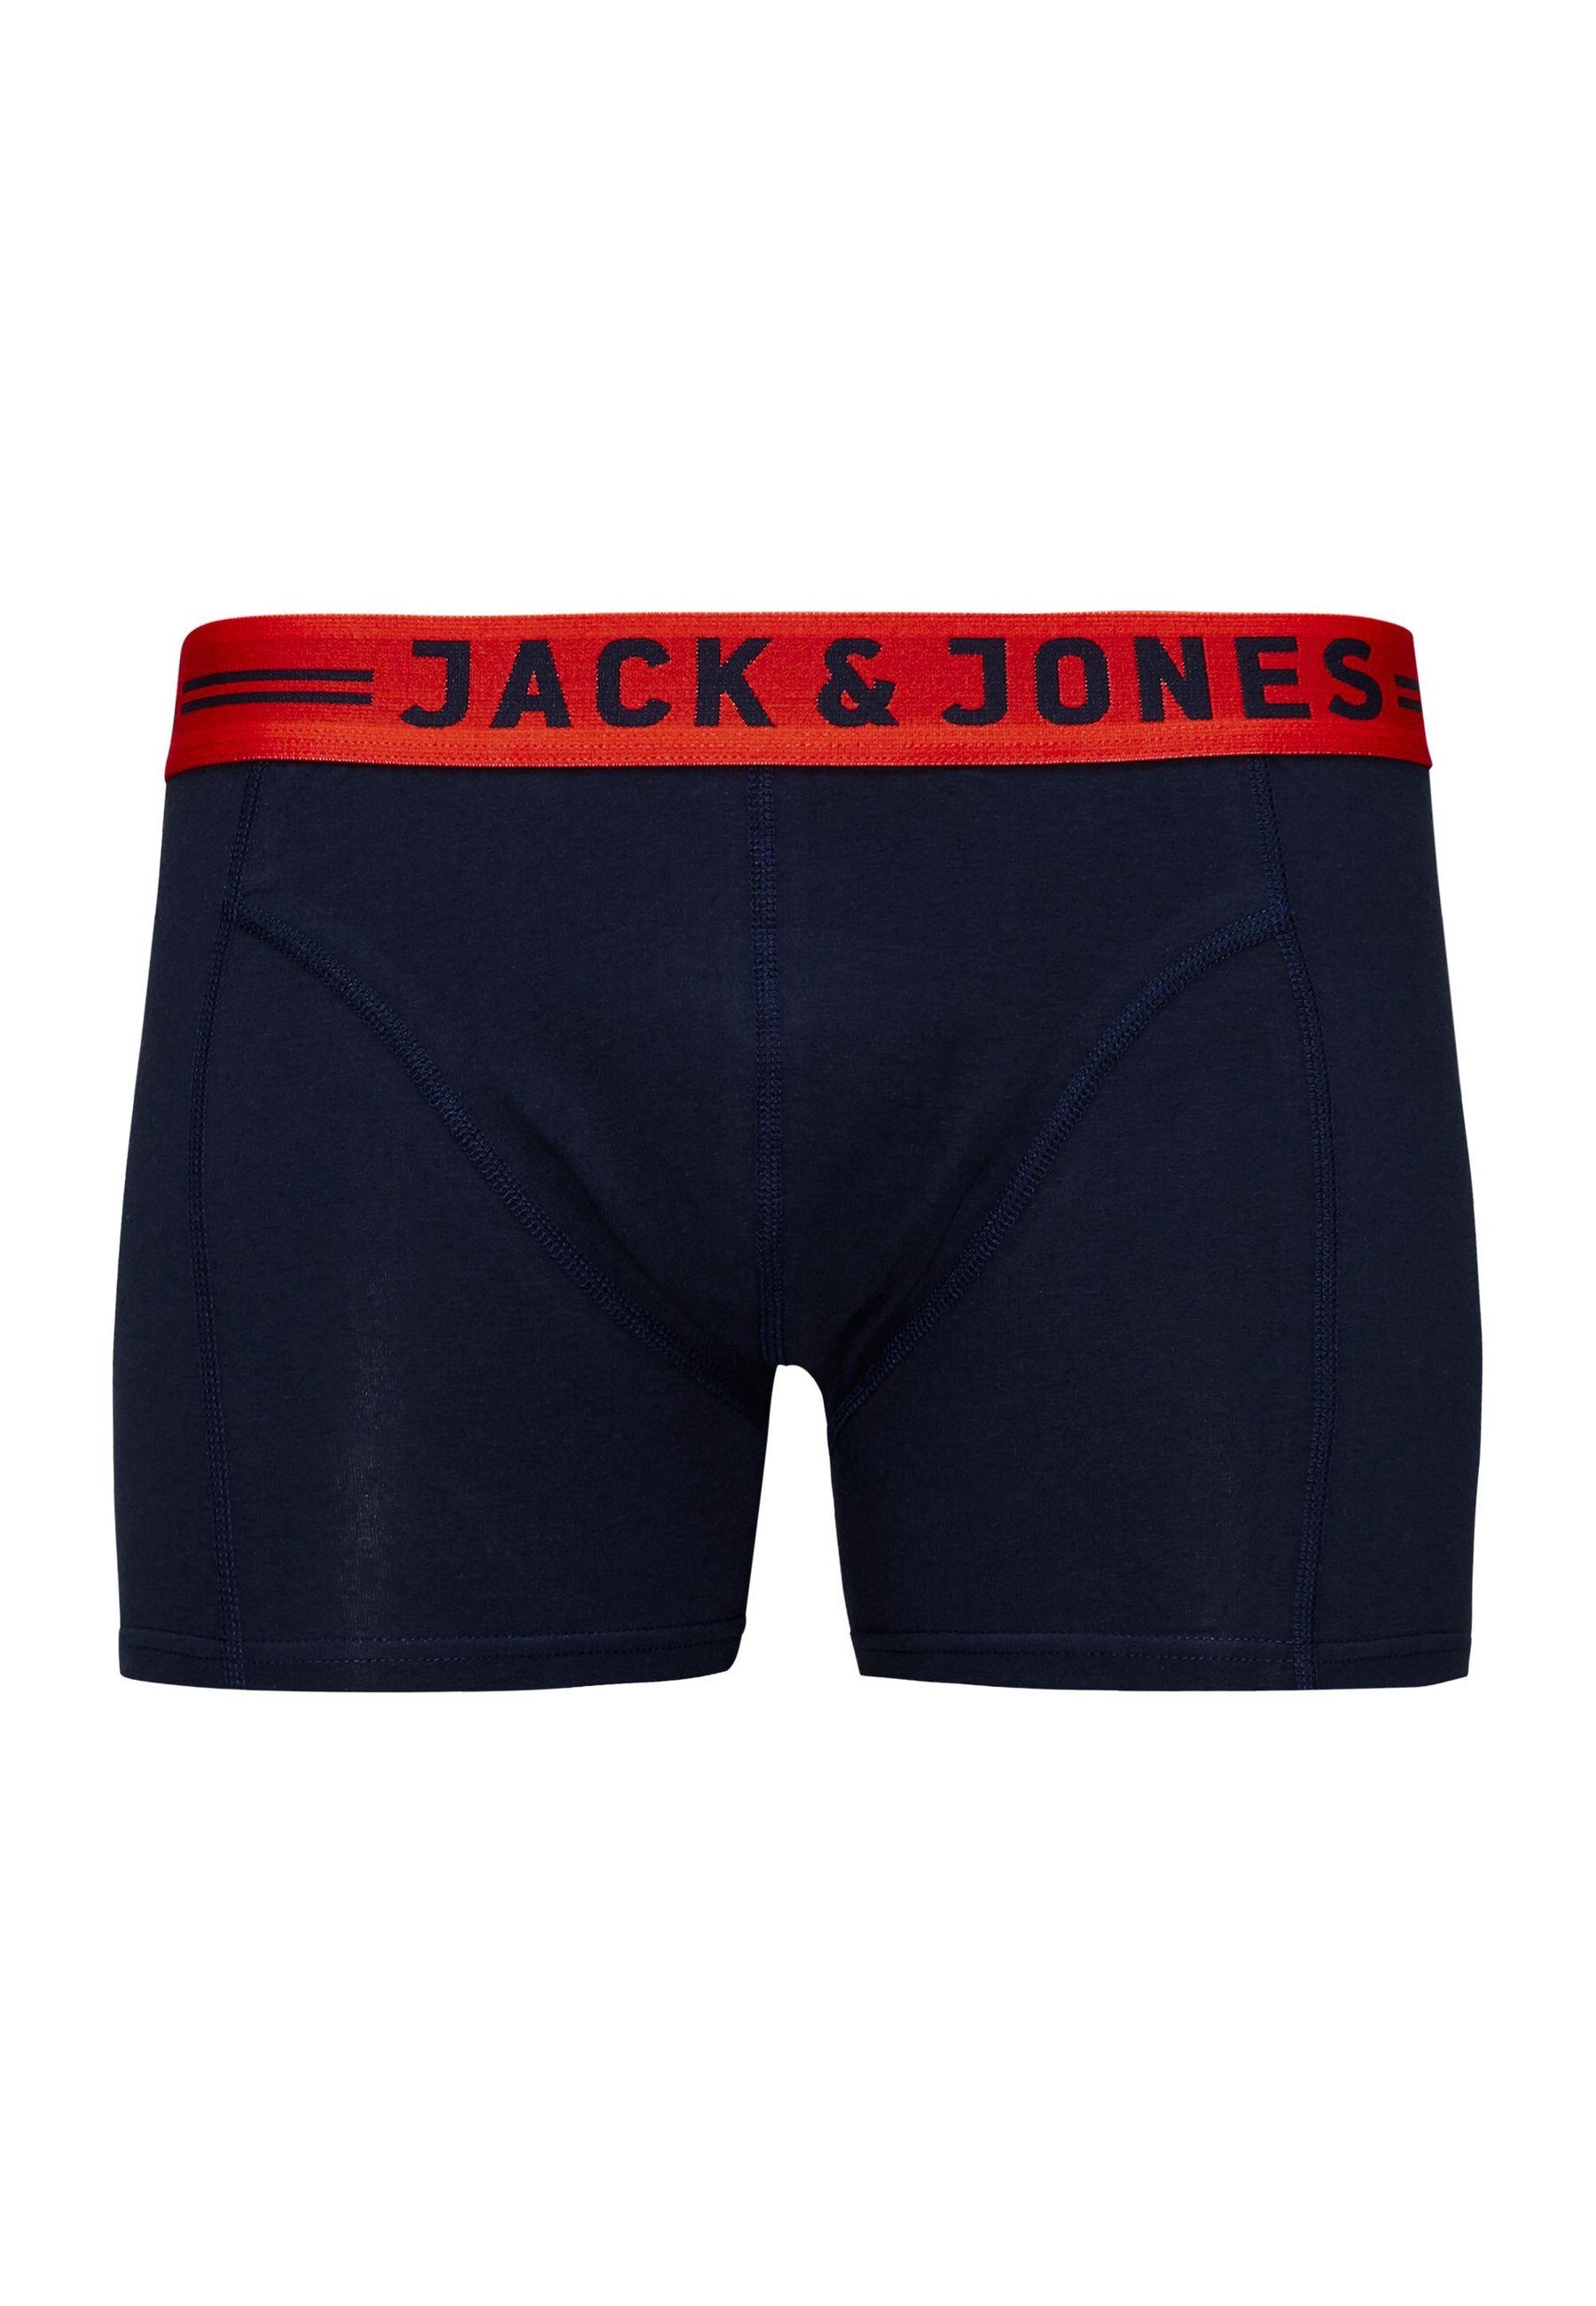 Jack & Jones Boxershorts Trunks Sense Mix Color Unterhose dunkelblau